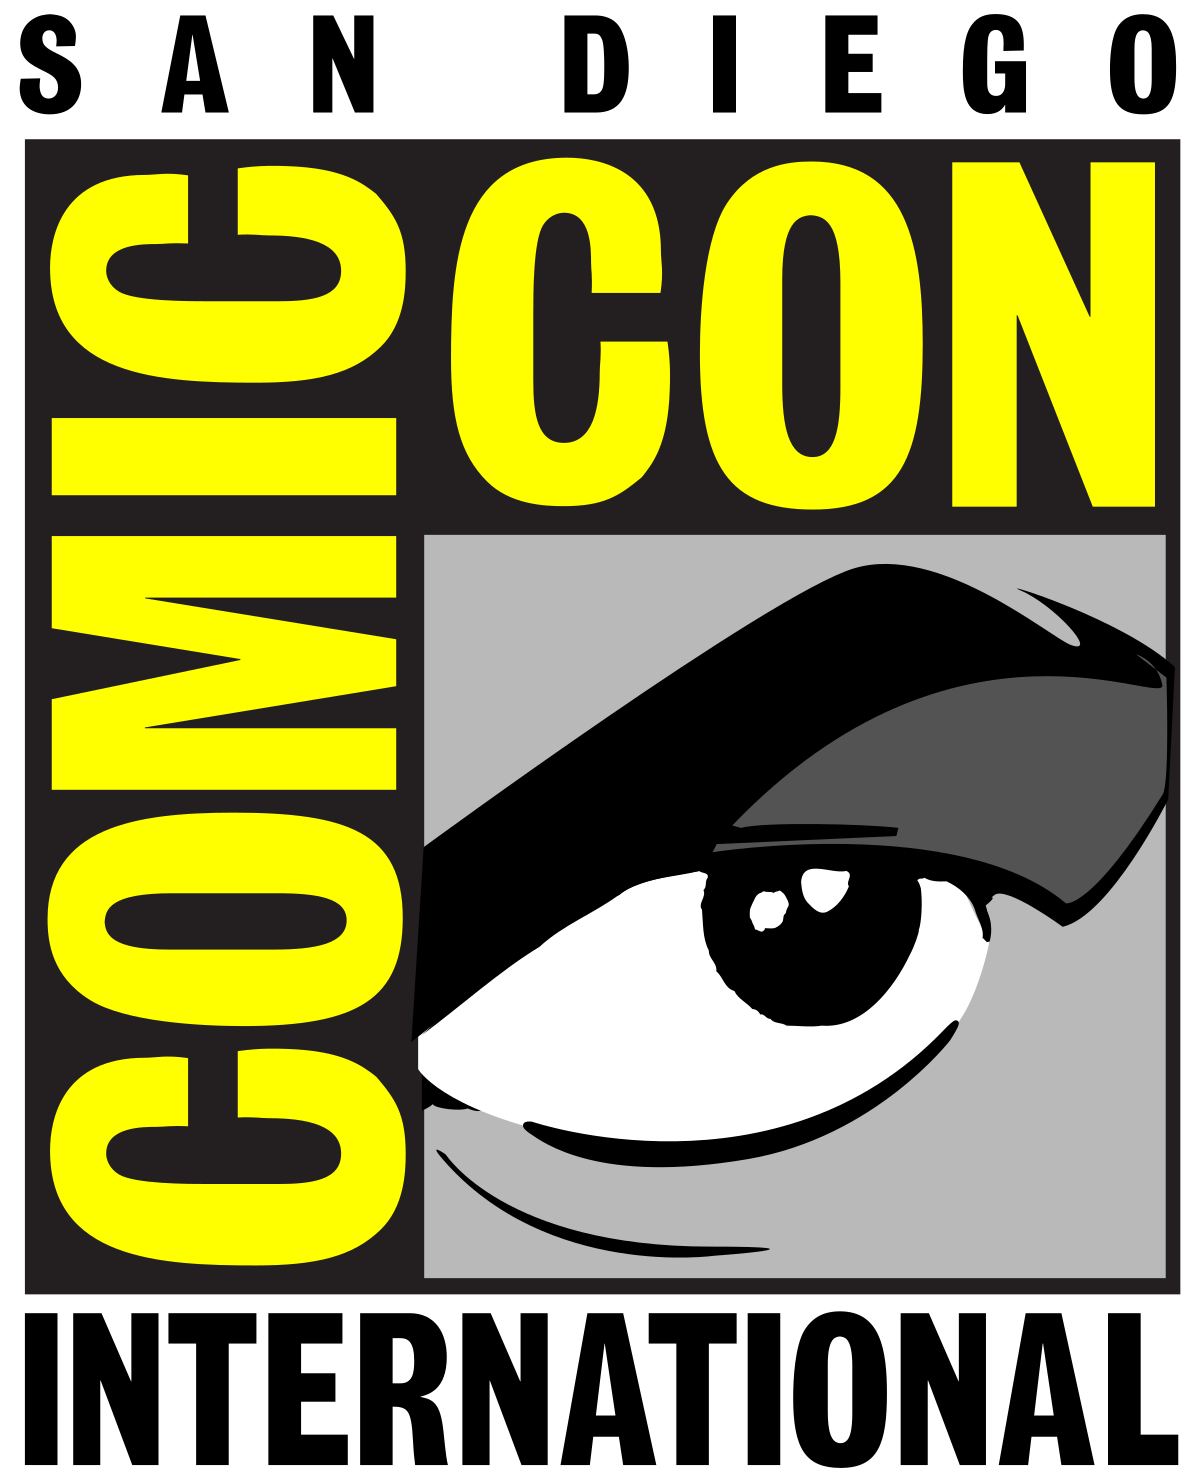 San Diego Comic-Con - Wikipedia